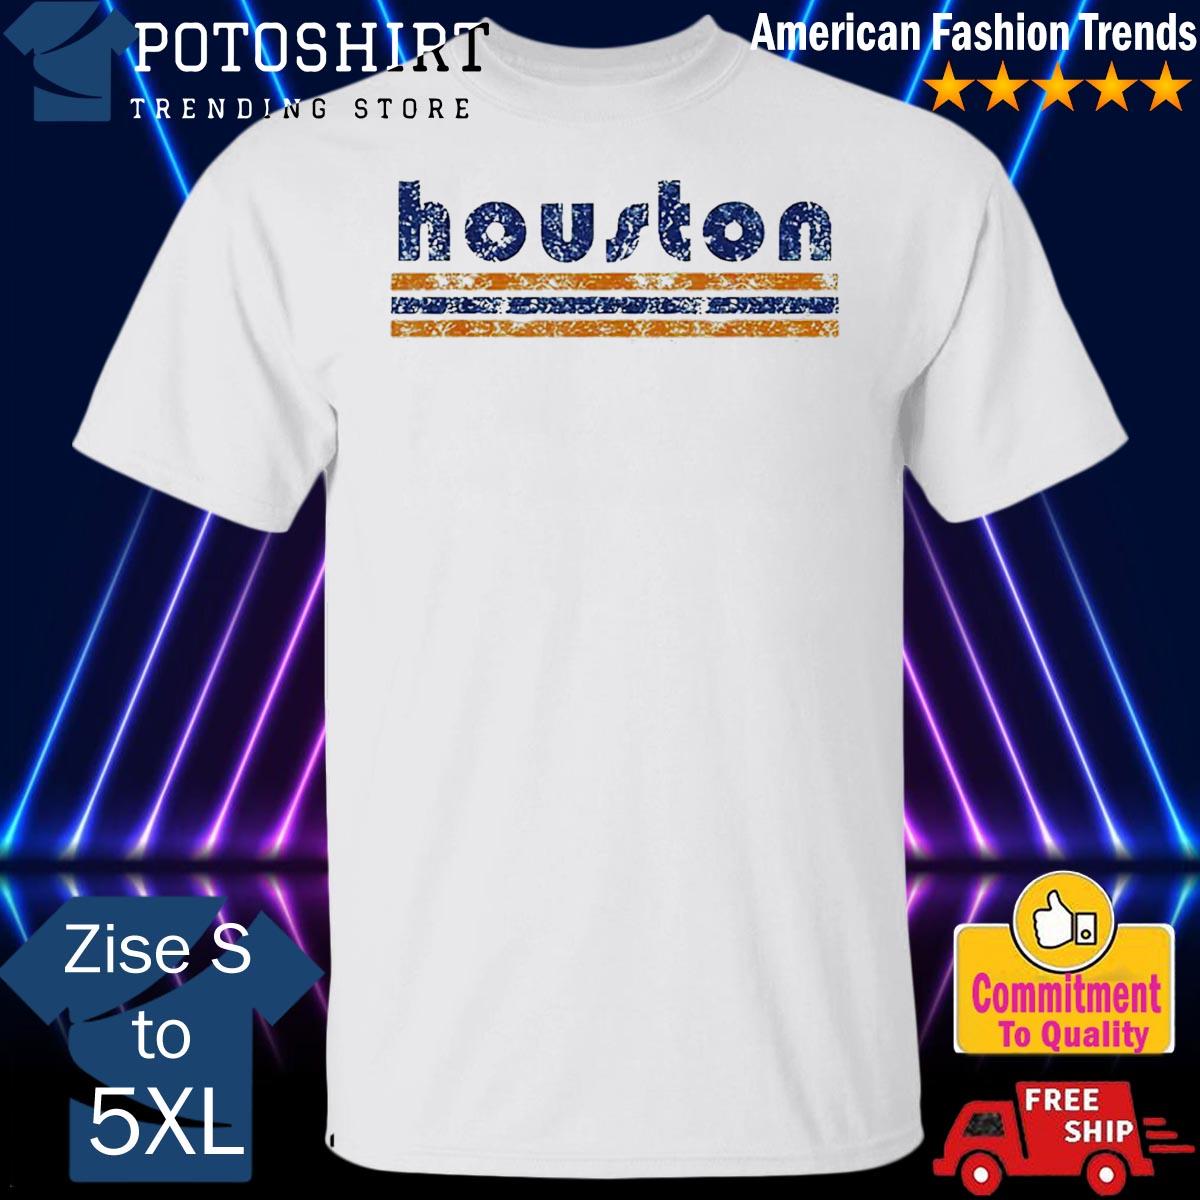 Potoshirt LLC on X: Astros Shirt Houston Astros Baseball Shirt